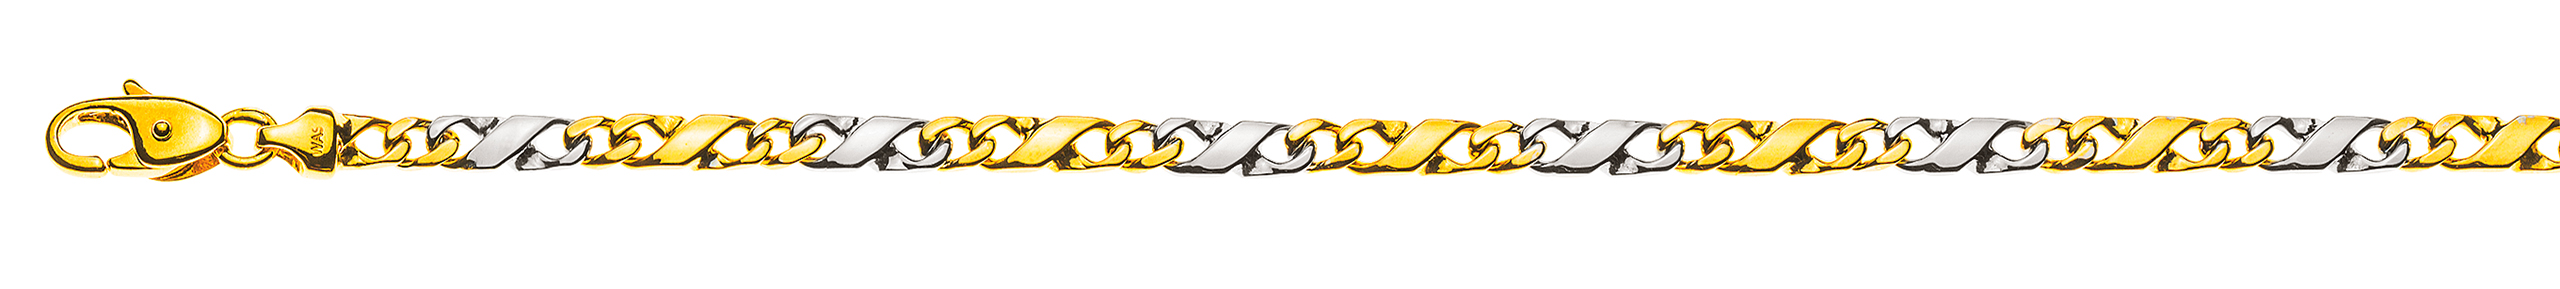 AURONOS Prestige Carrera 18K Yellow/White Gold Bracelet 19cm 4mm